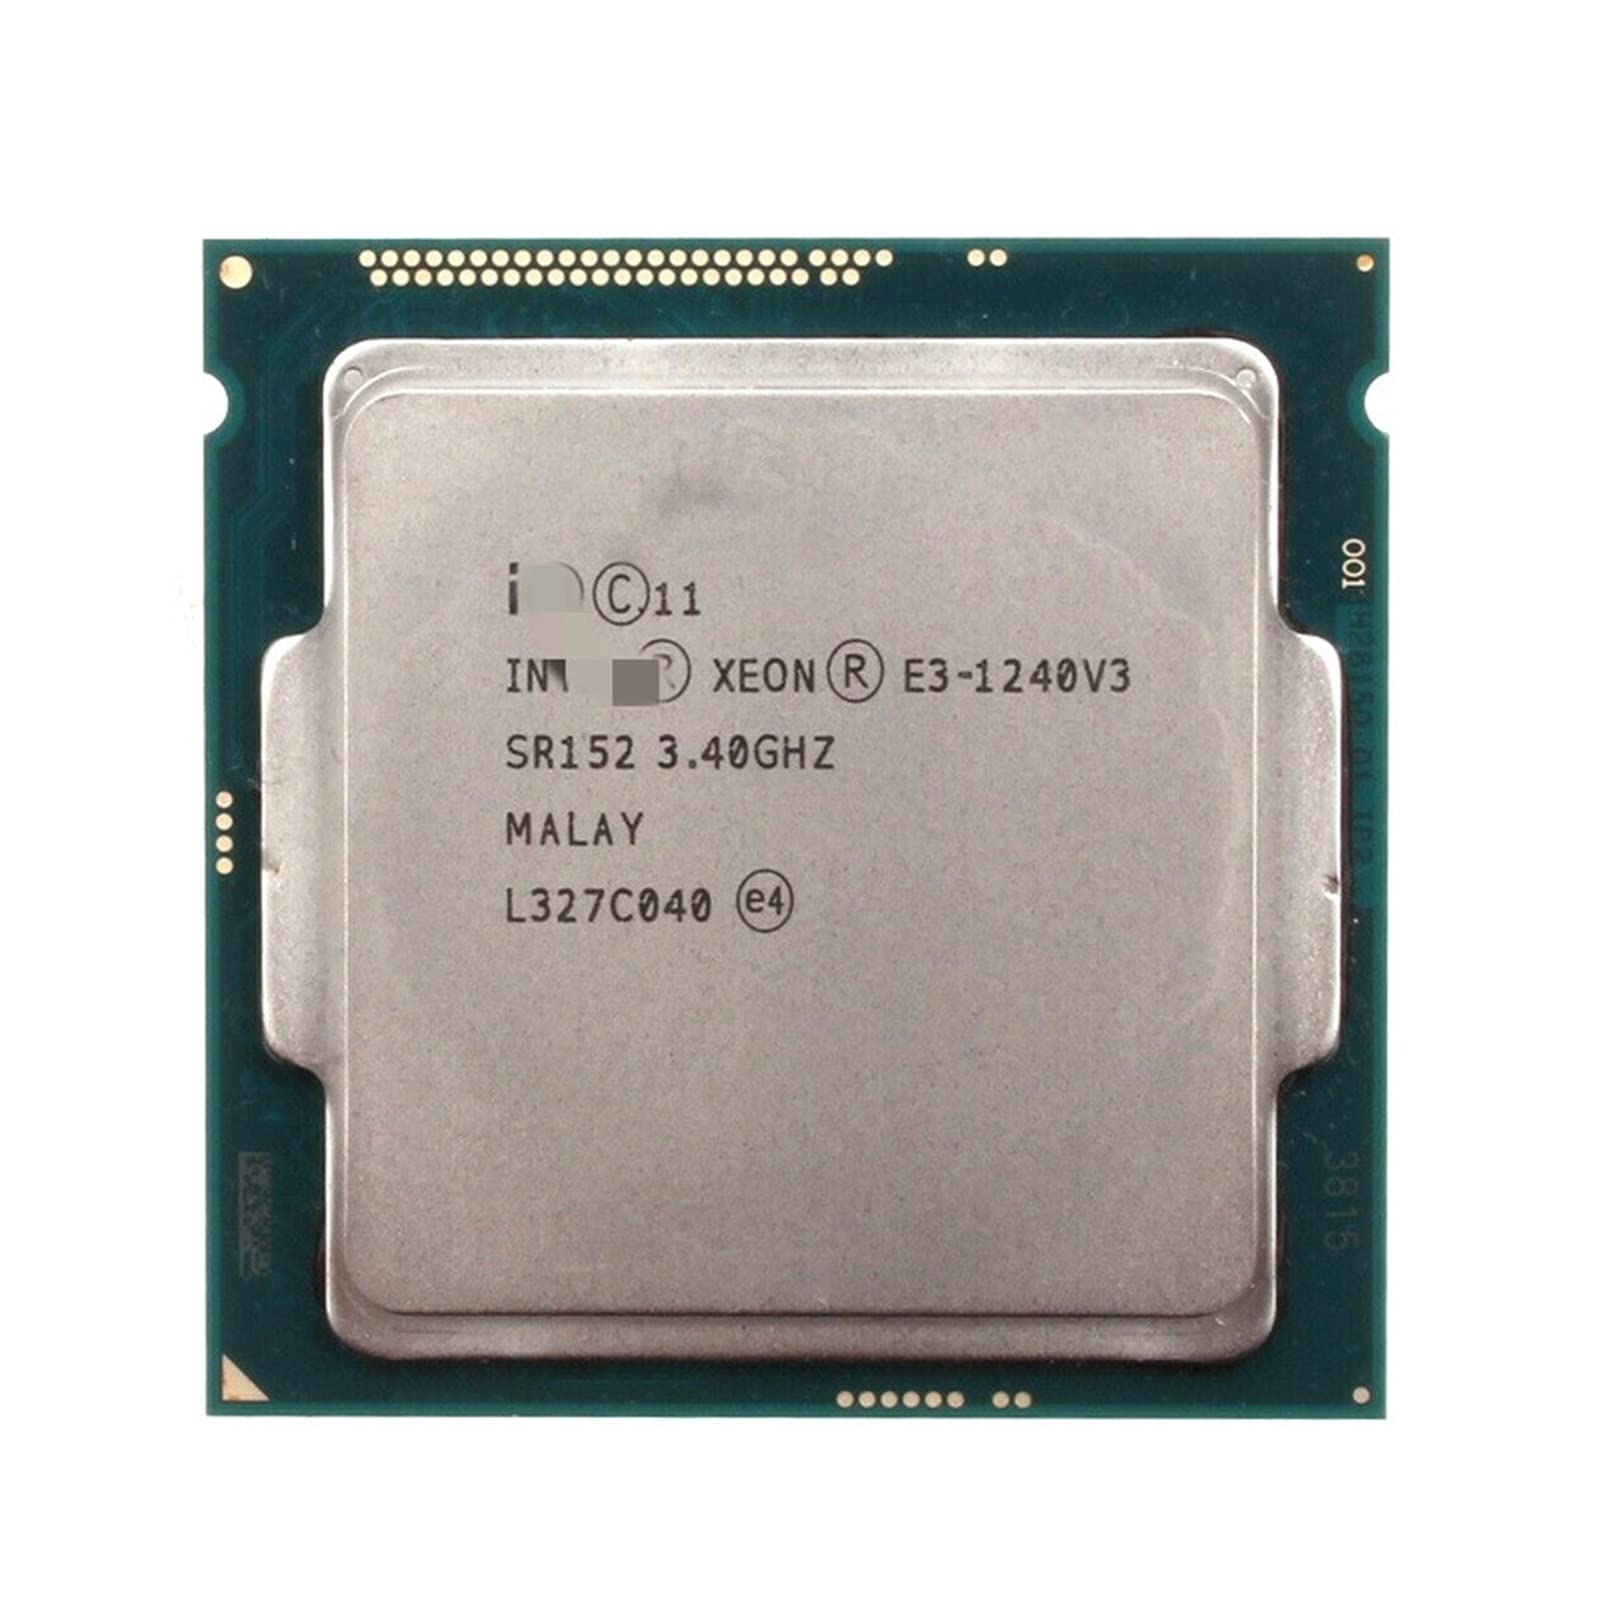 E3 1240 V3 8M Cache 3.4 GHz SR152 LGA1150 CPU Processor CPU